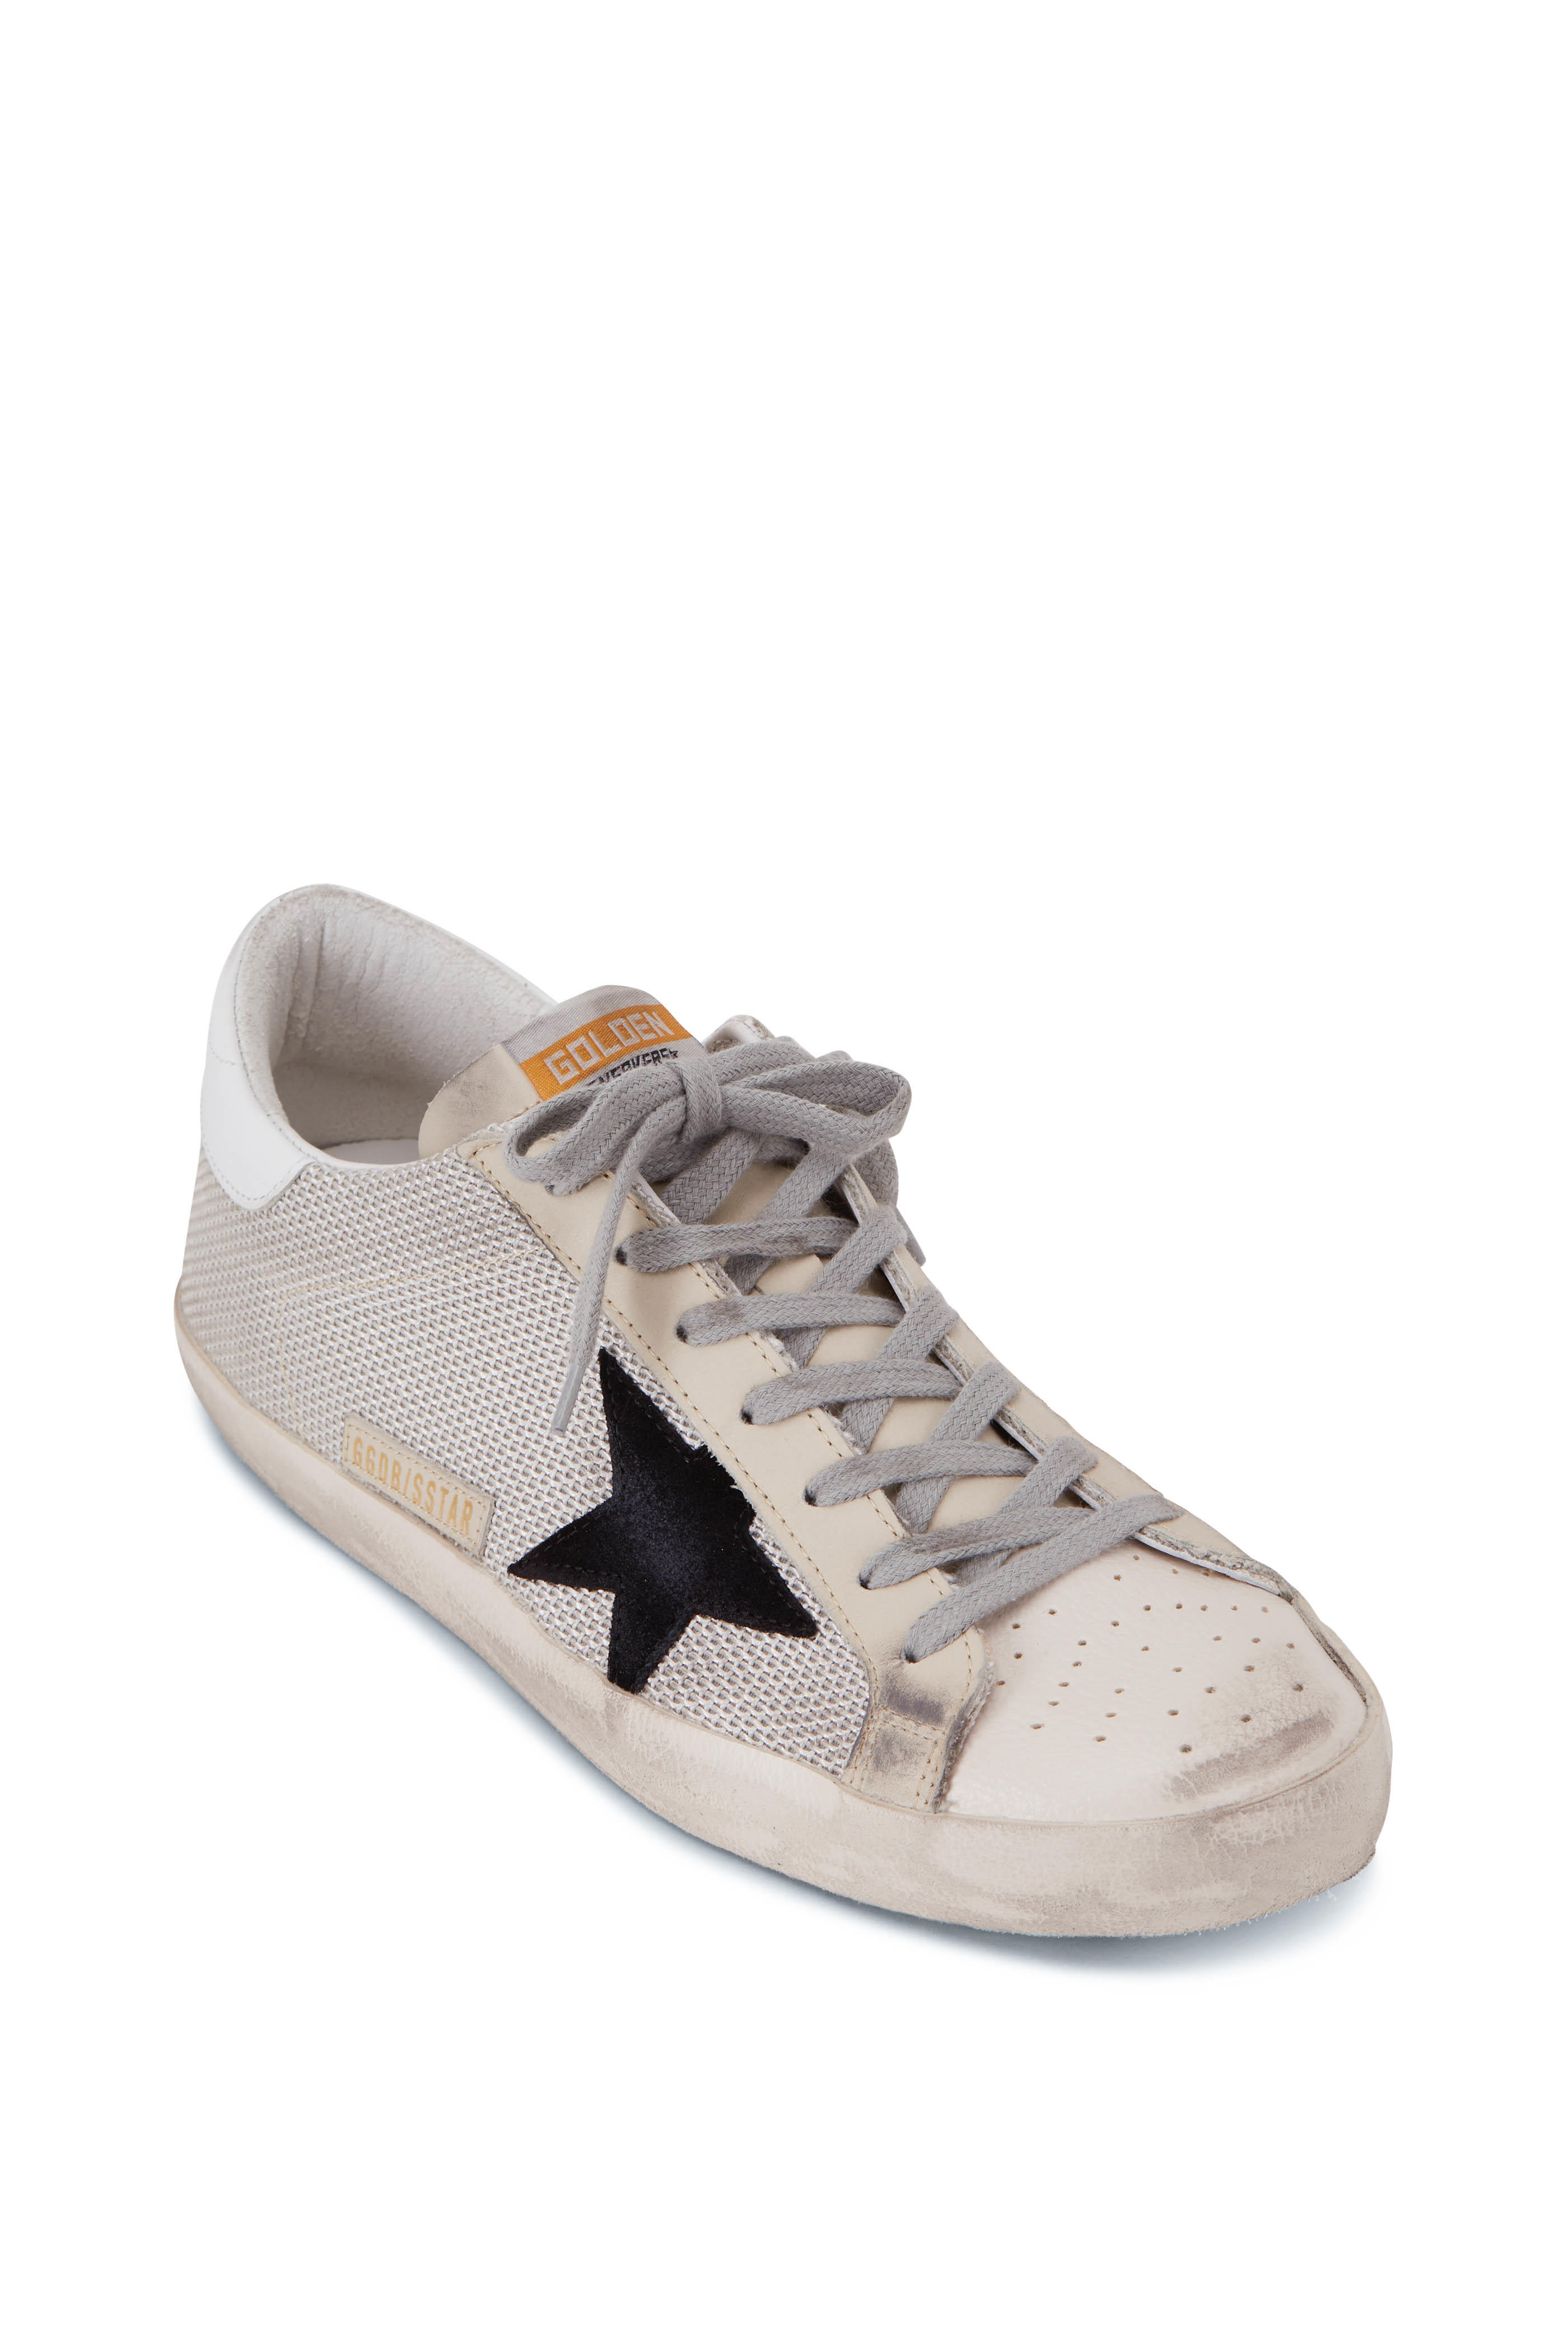 Golden Goose Silver & Black Sneaker | Stores